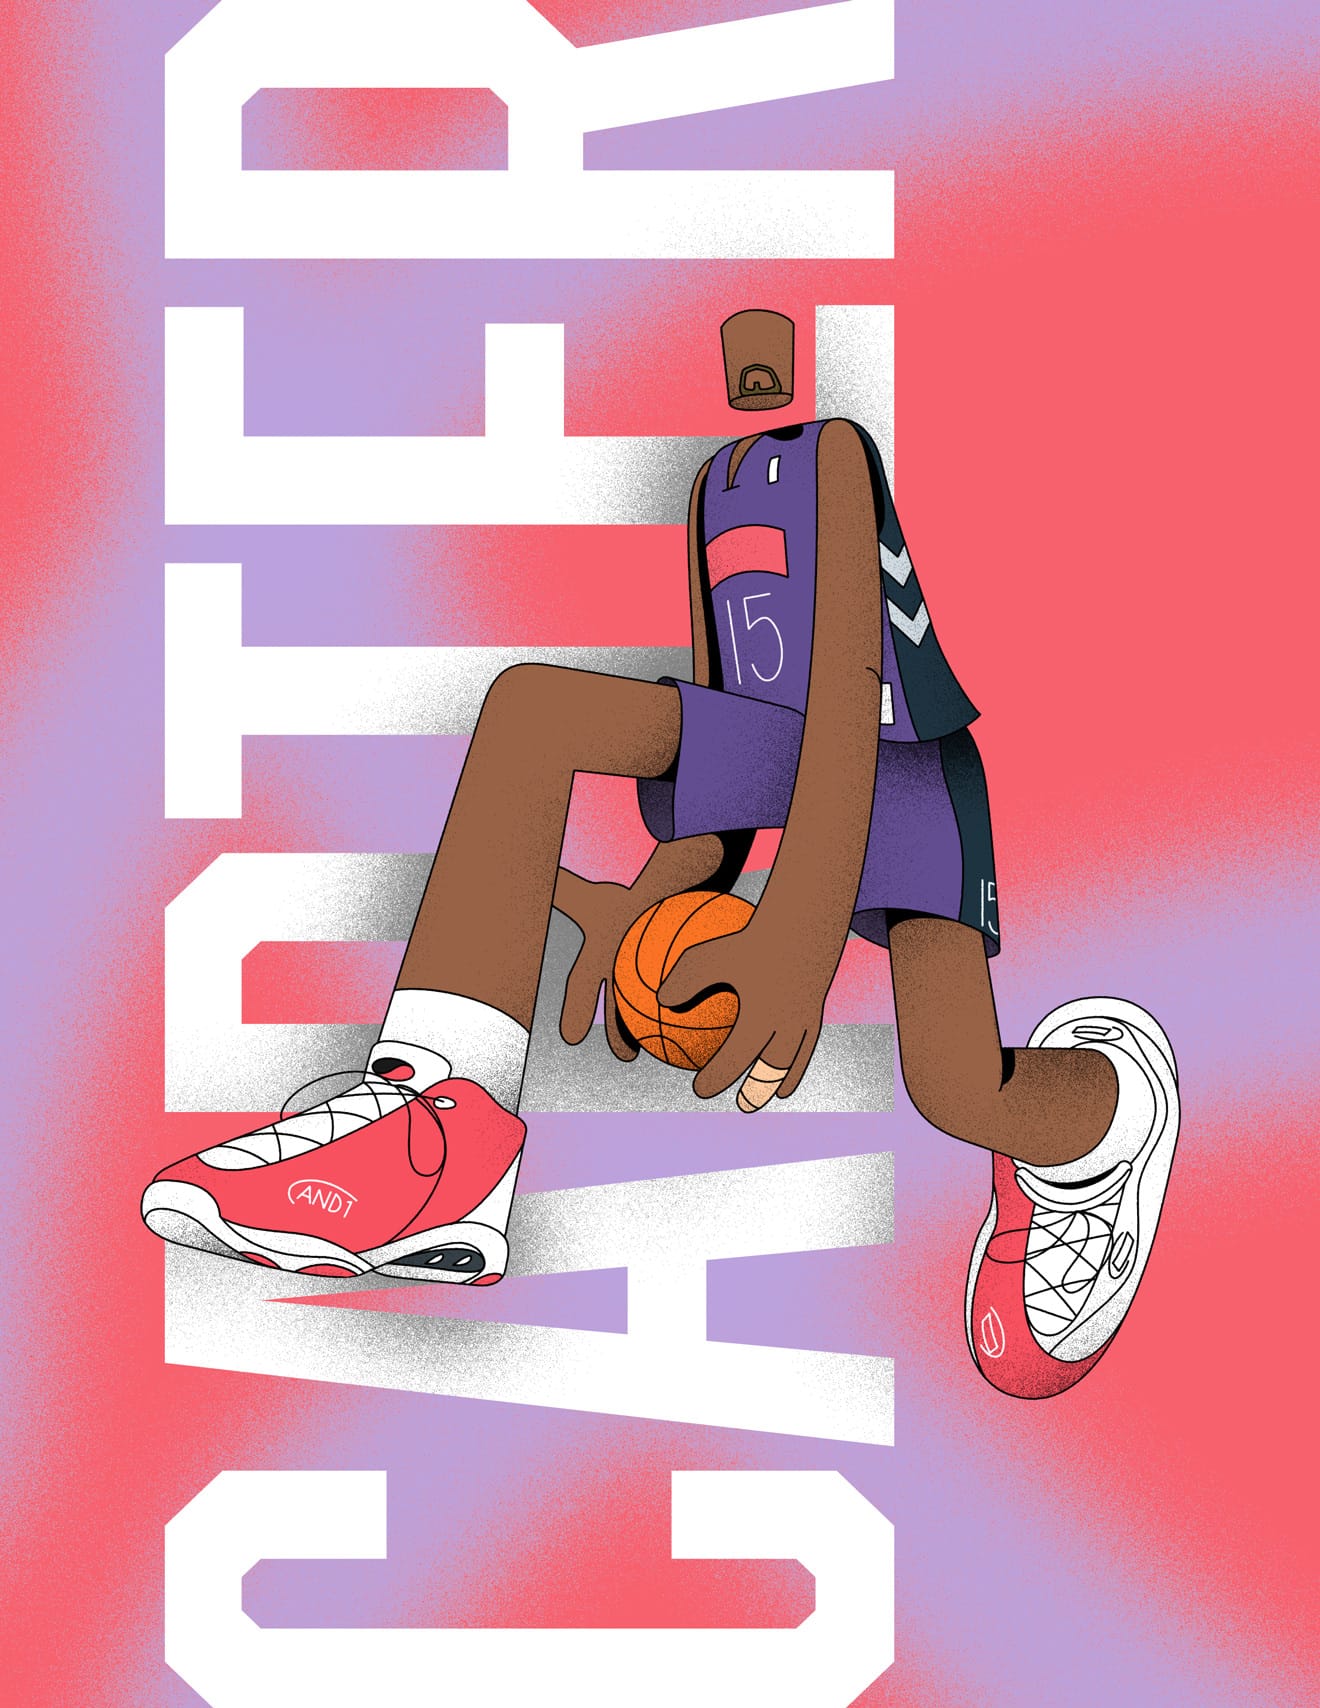 Illustration of basketball player, Vince Carter, mid-dunk